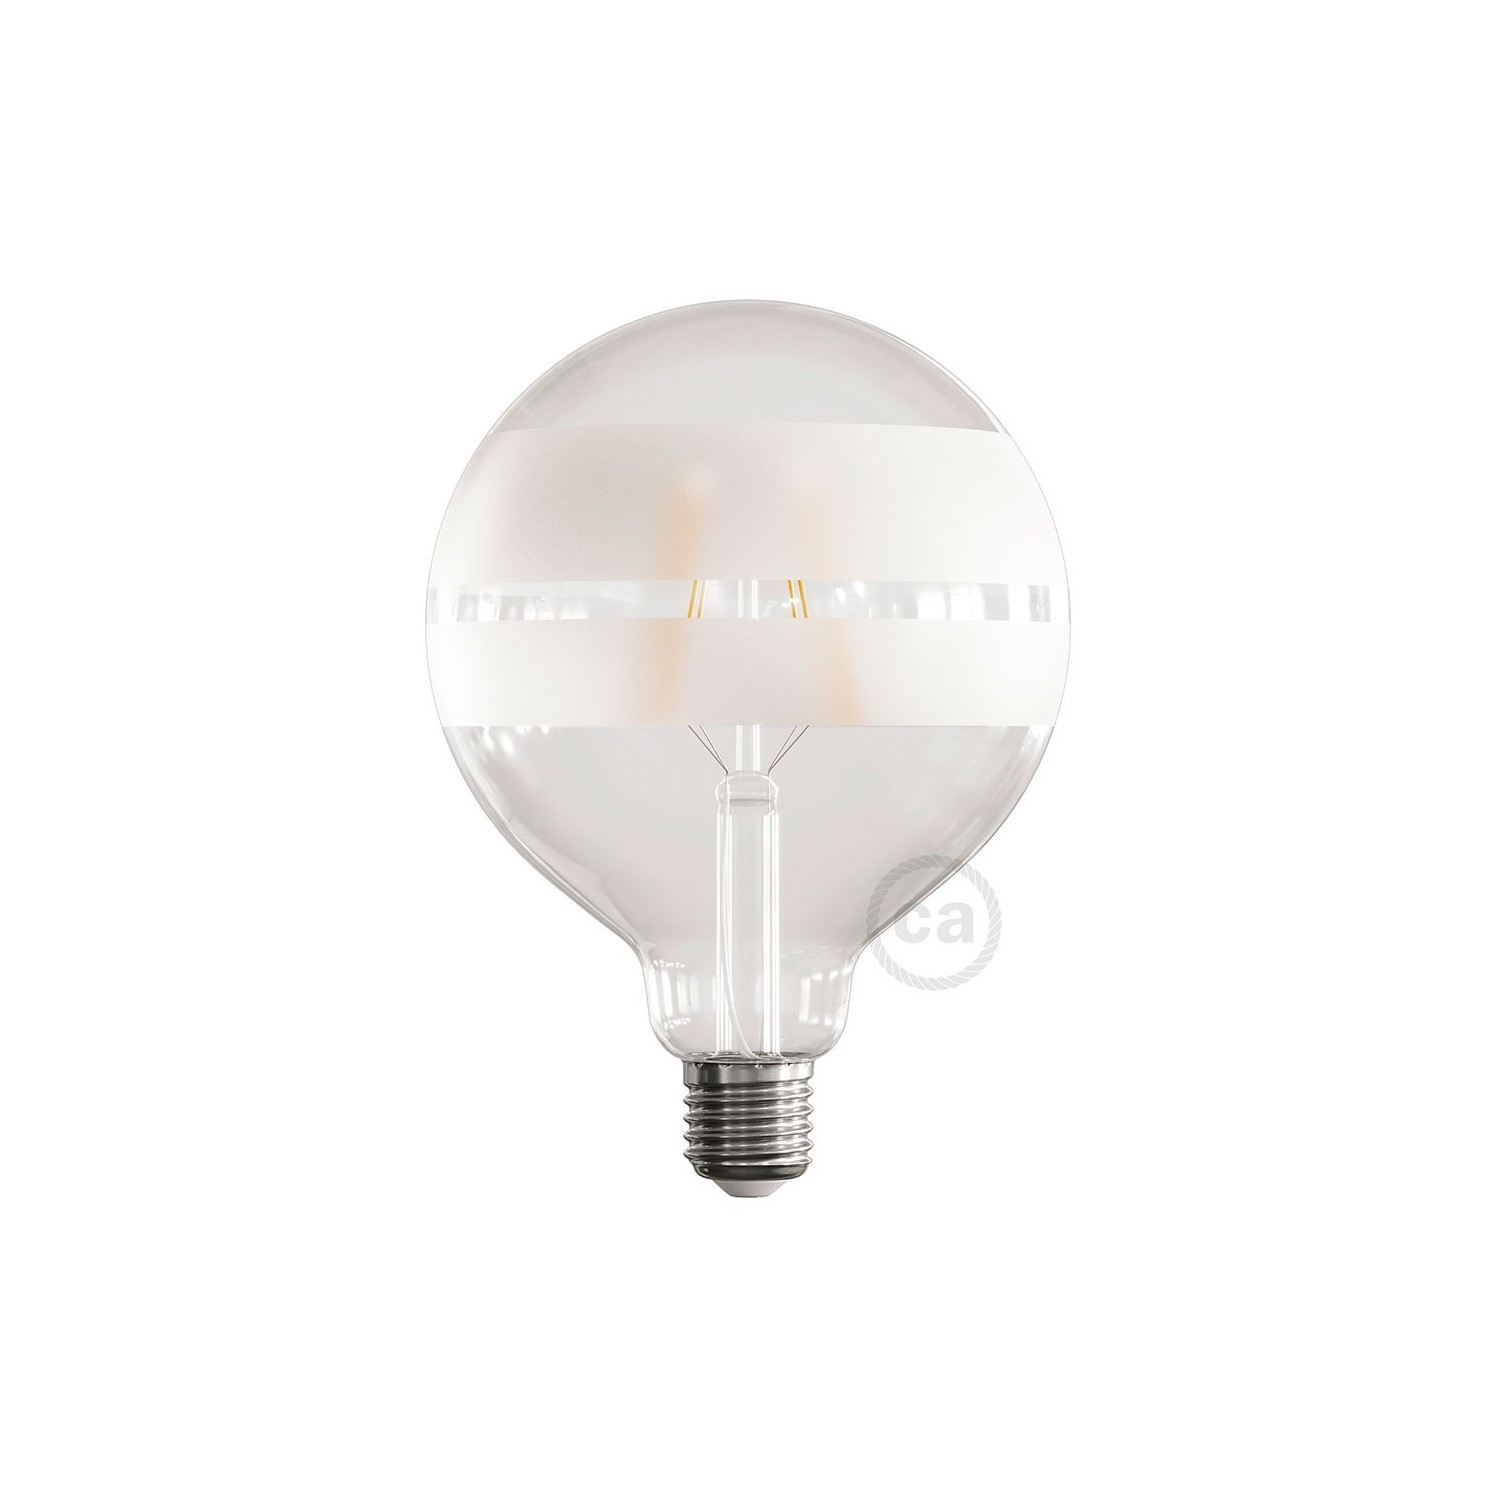 LED Light Bulb Globe G125 Short Filament - Tattoo Lamp® Saturn 4W 420Lm E27 2700K